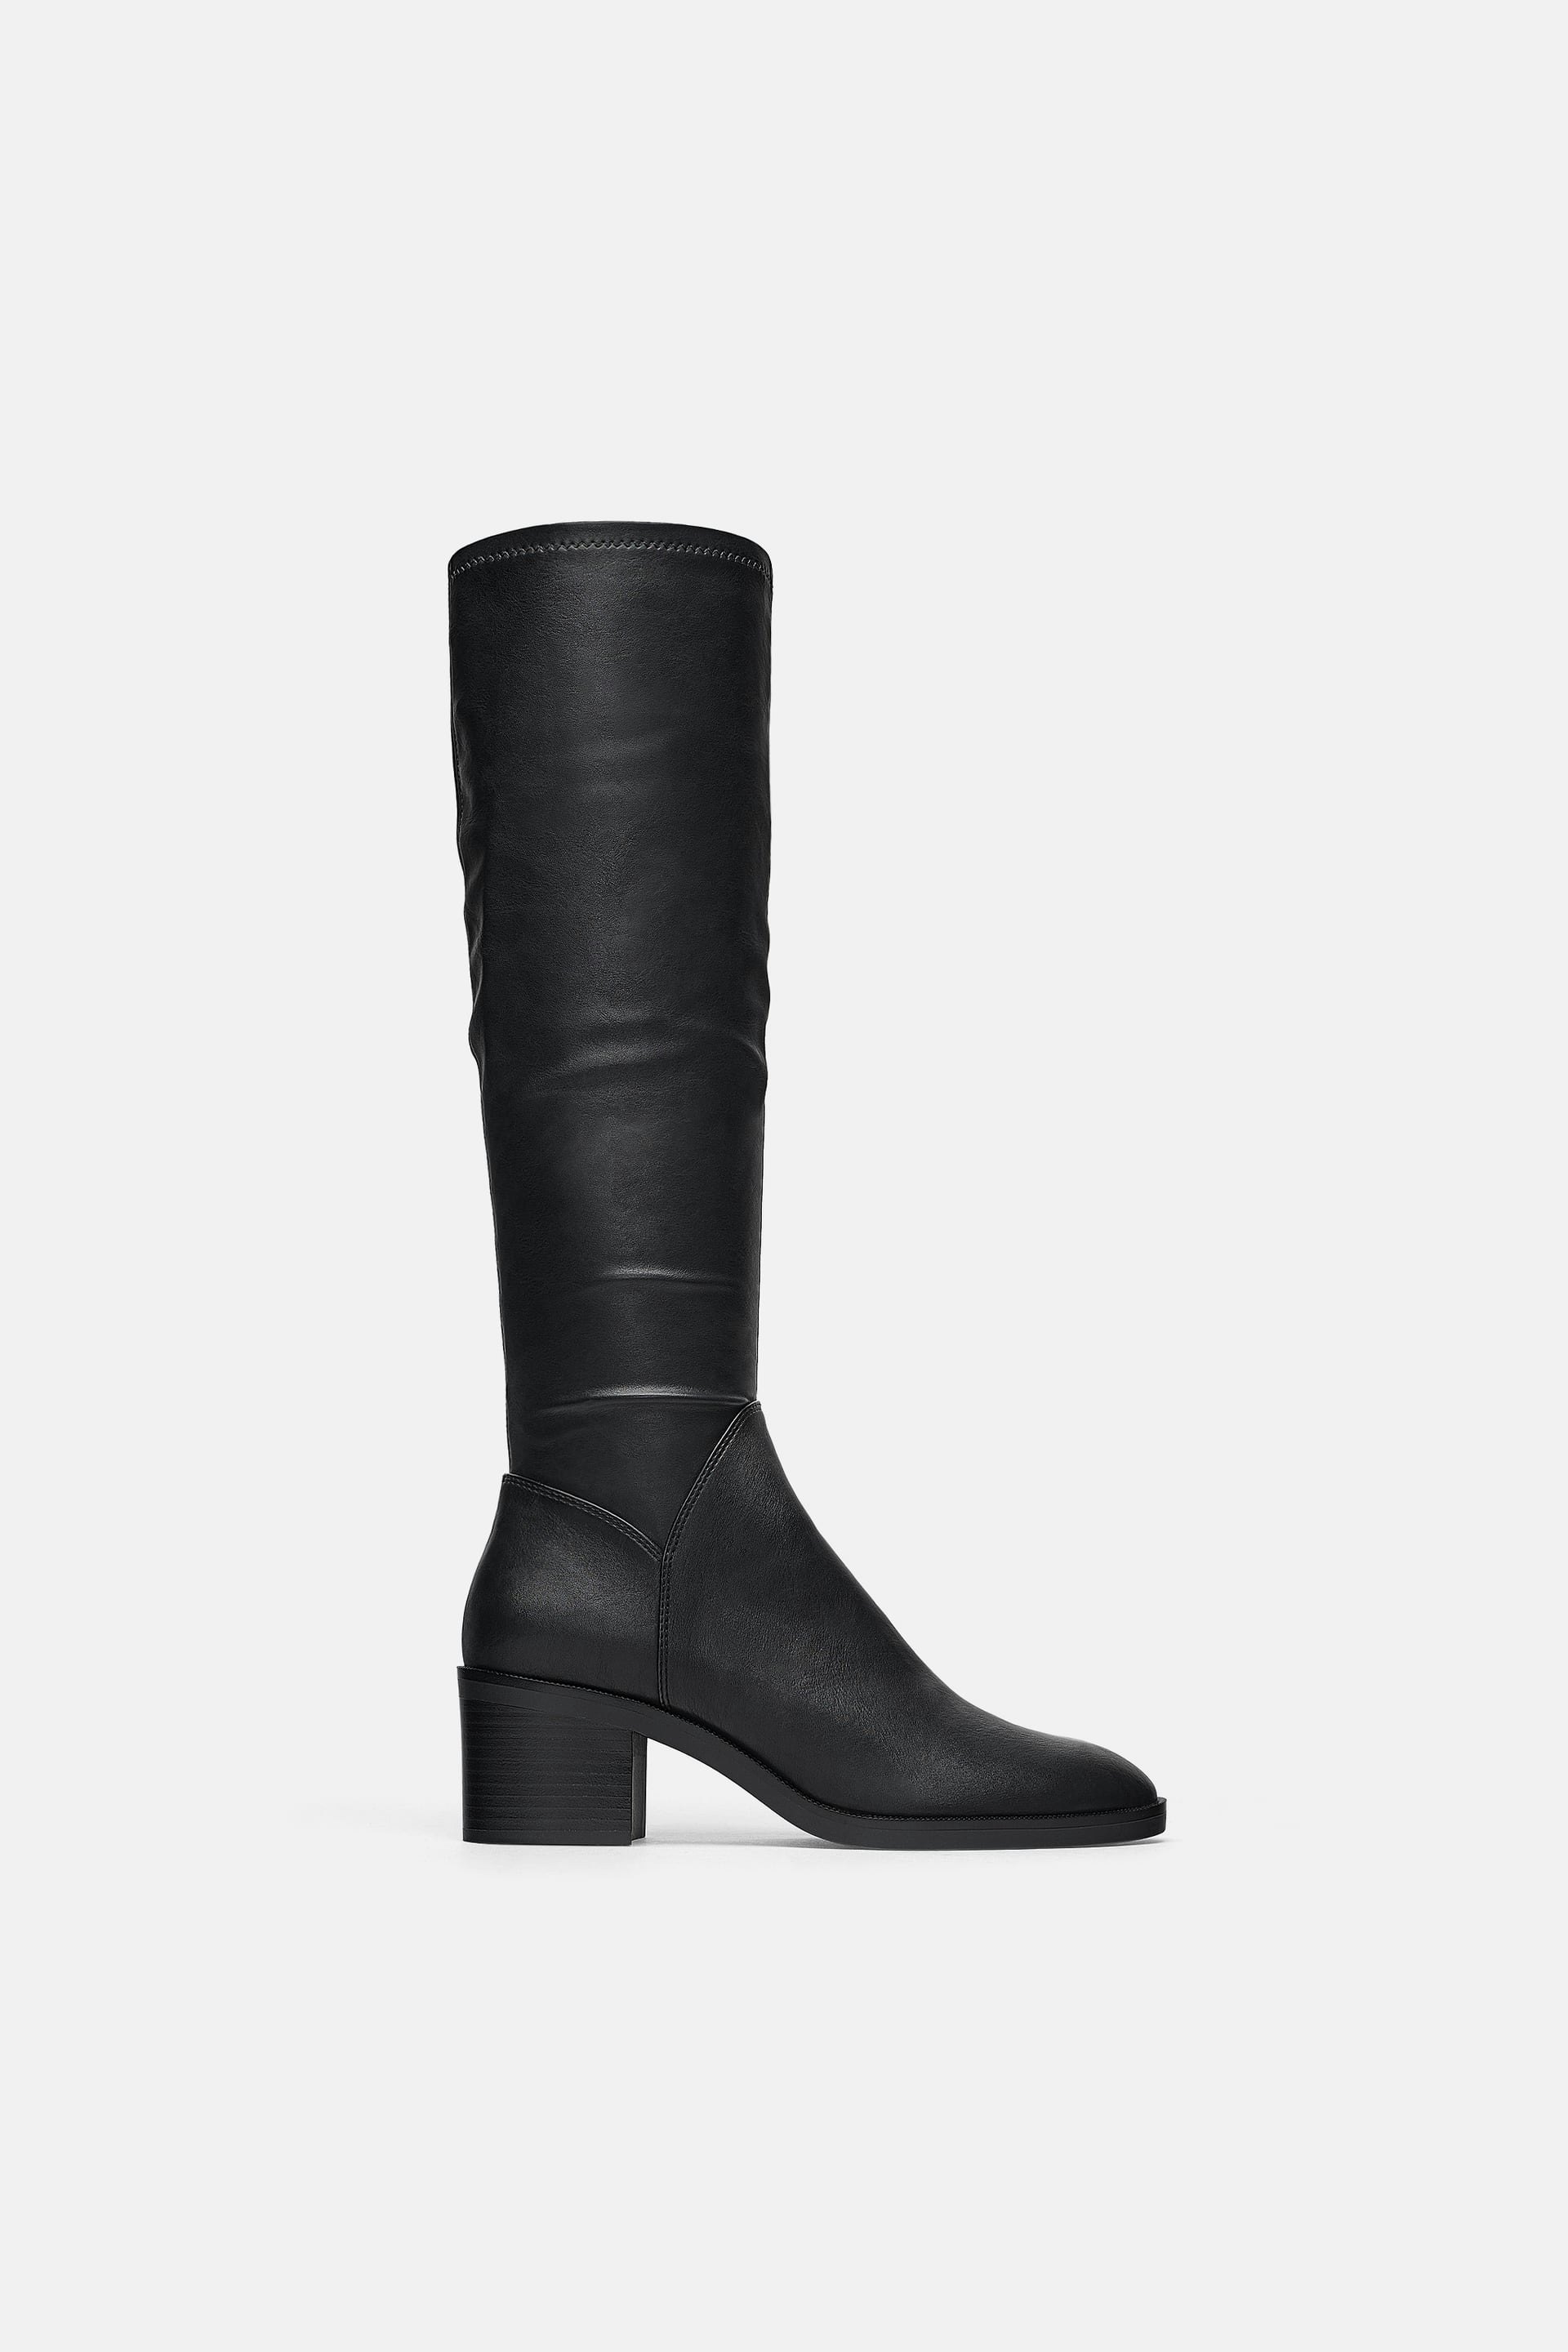 zara ladies boots sale